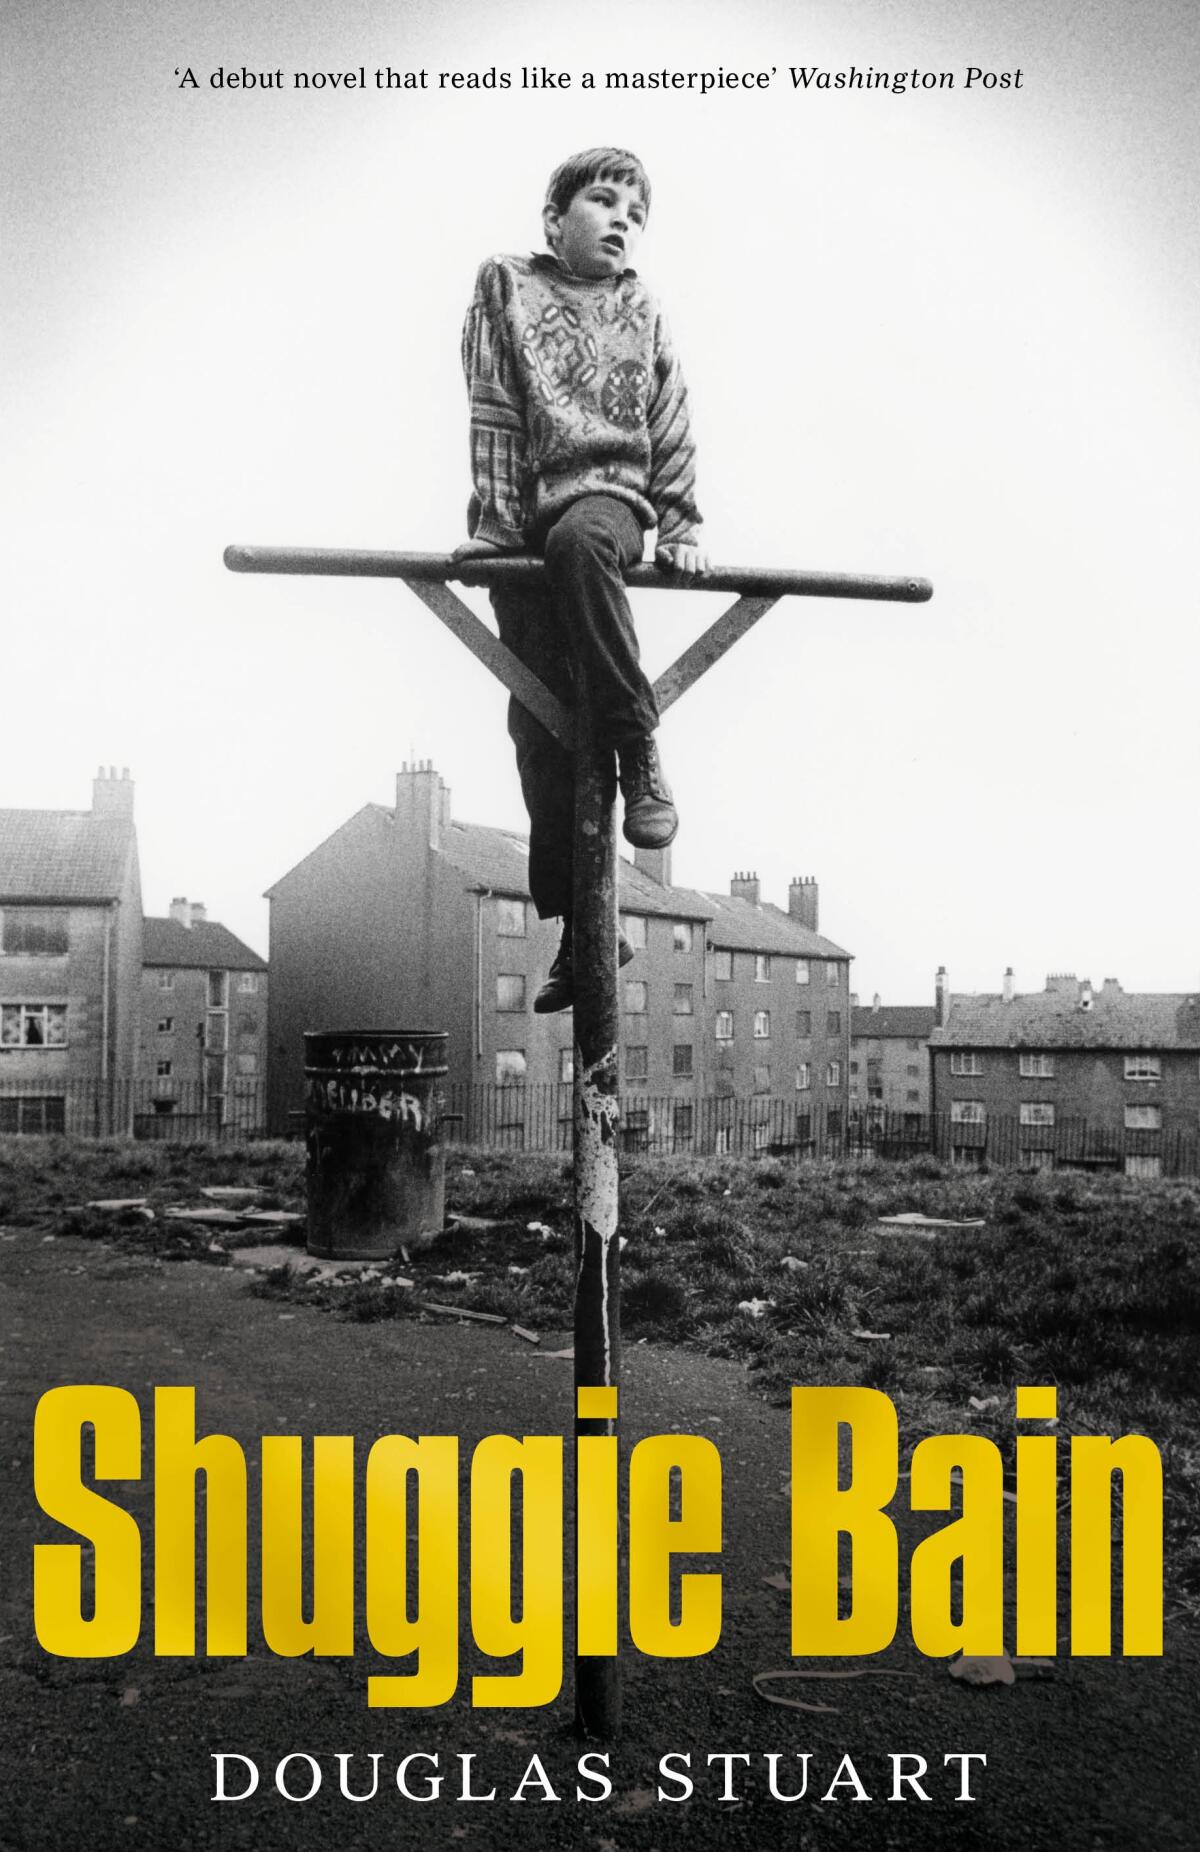 "Shuggie Bain" by Douglas Stuart won the 2020 Booker Prize.